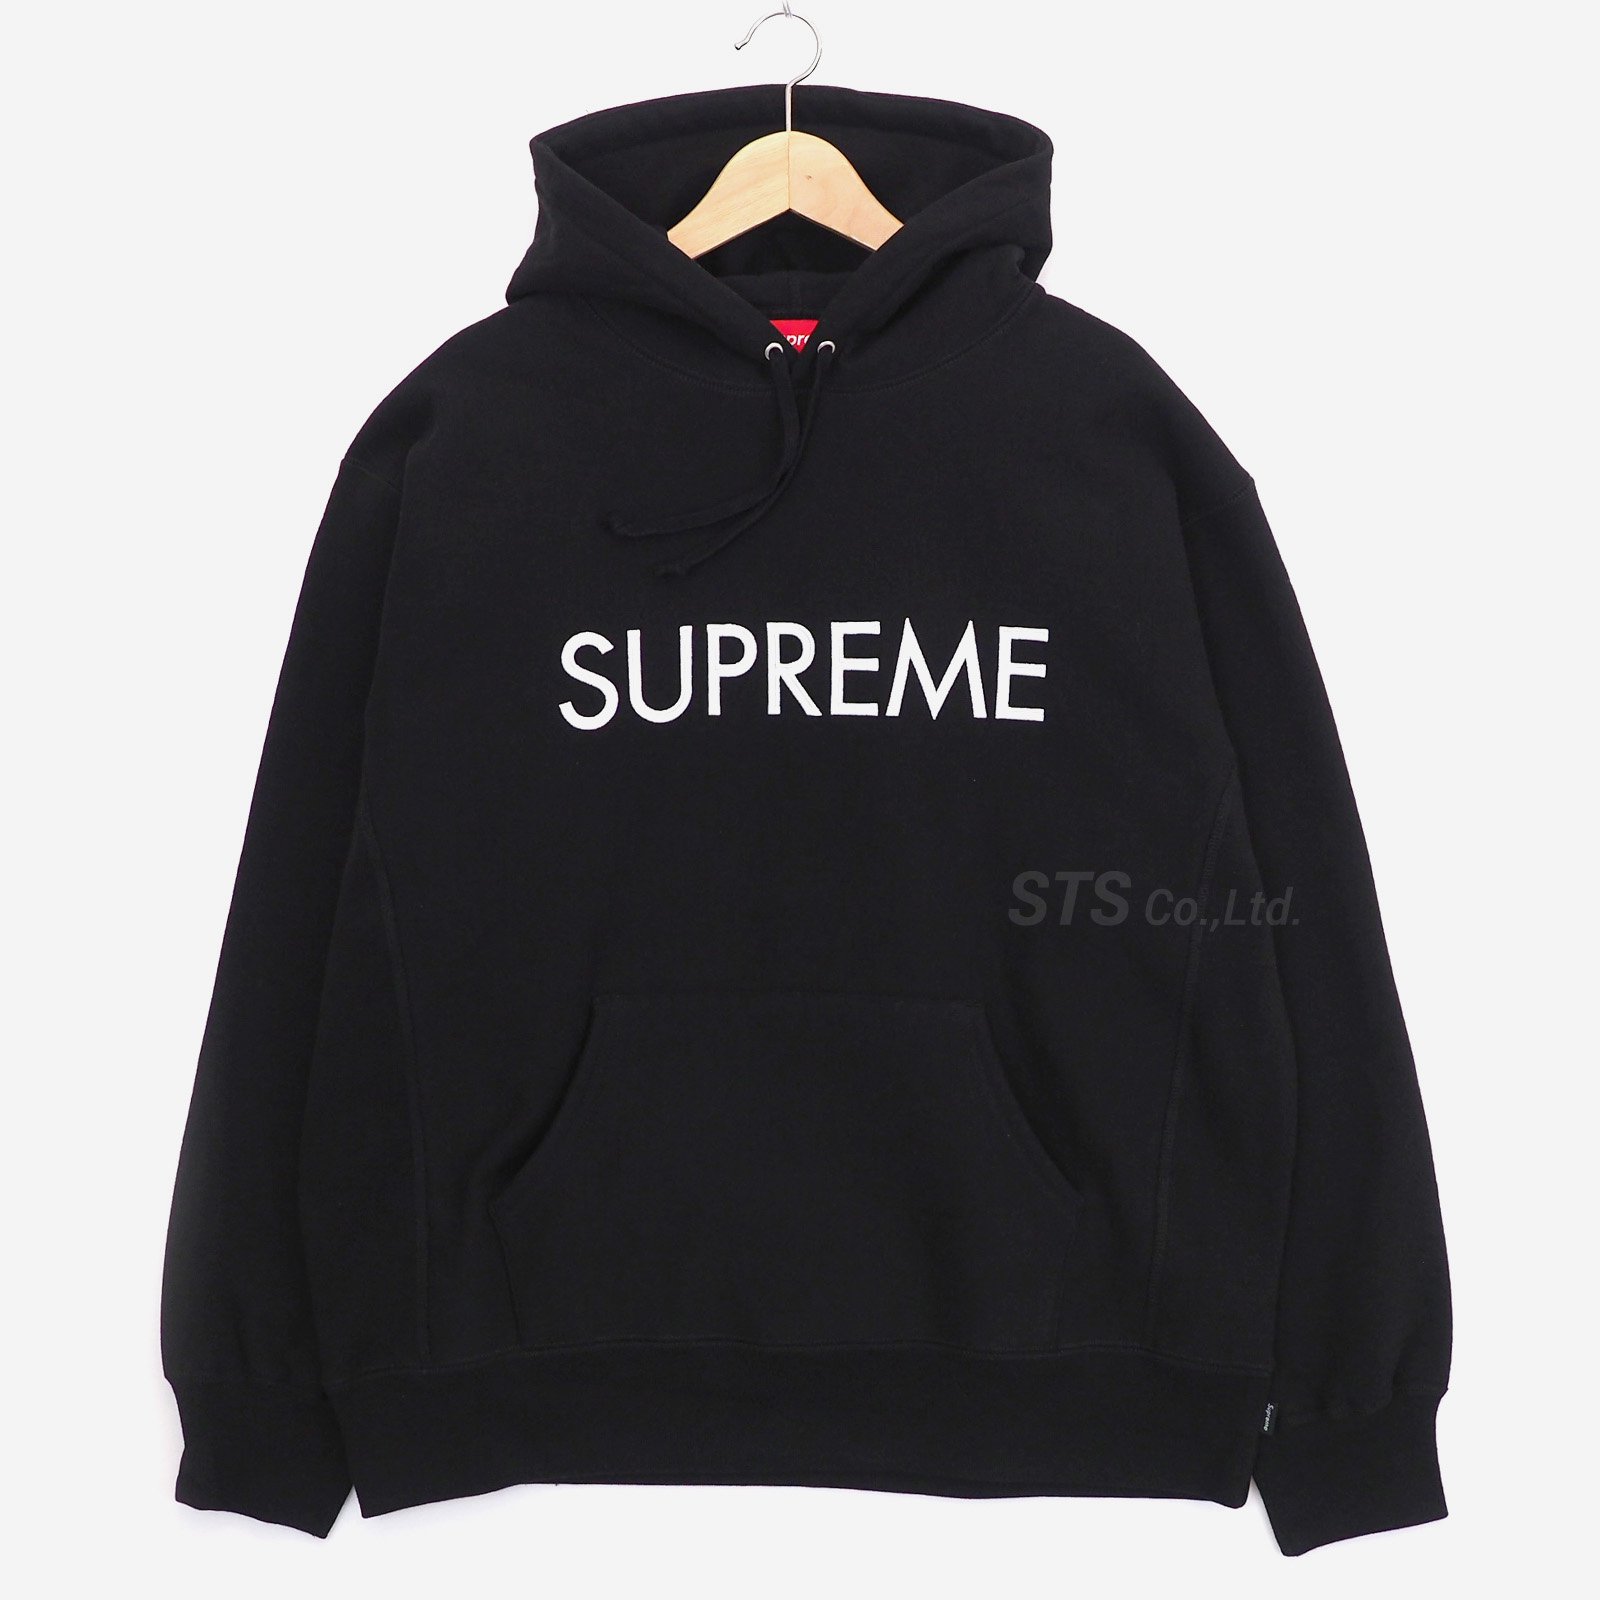 supremeSupreme Capital Hooded Sweatshirt XLサイズ